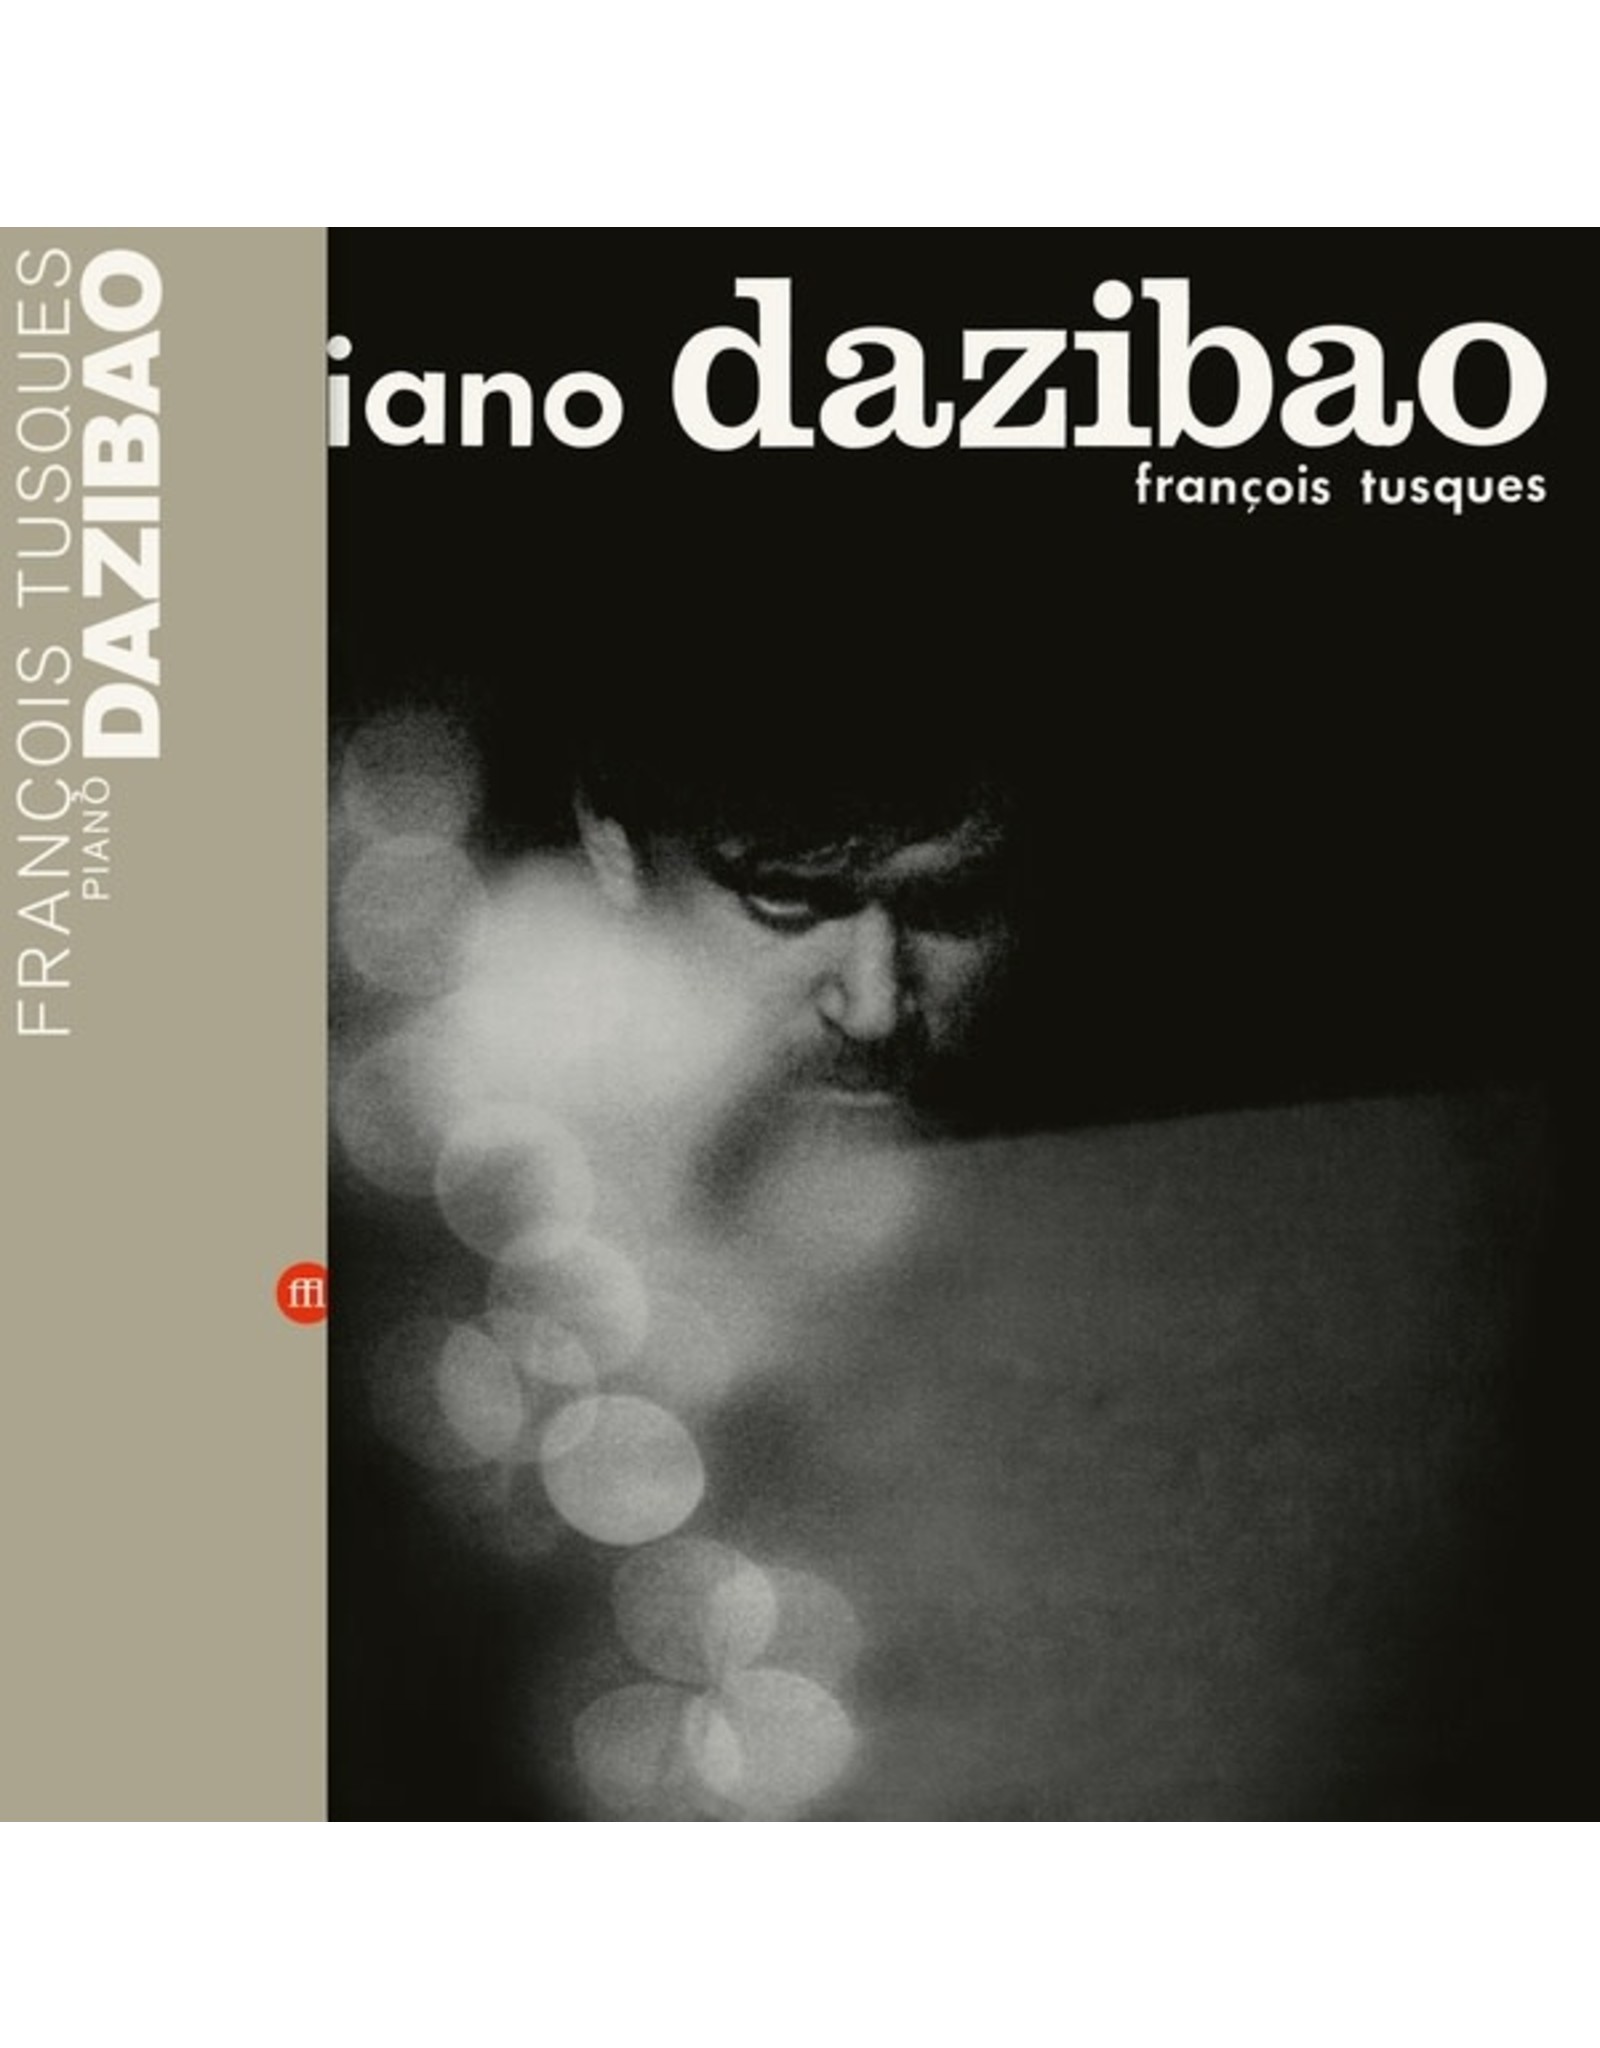 Souffle Continu Tusques, Francois: Piano Dazibao LP